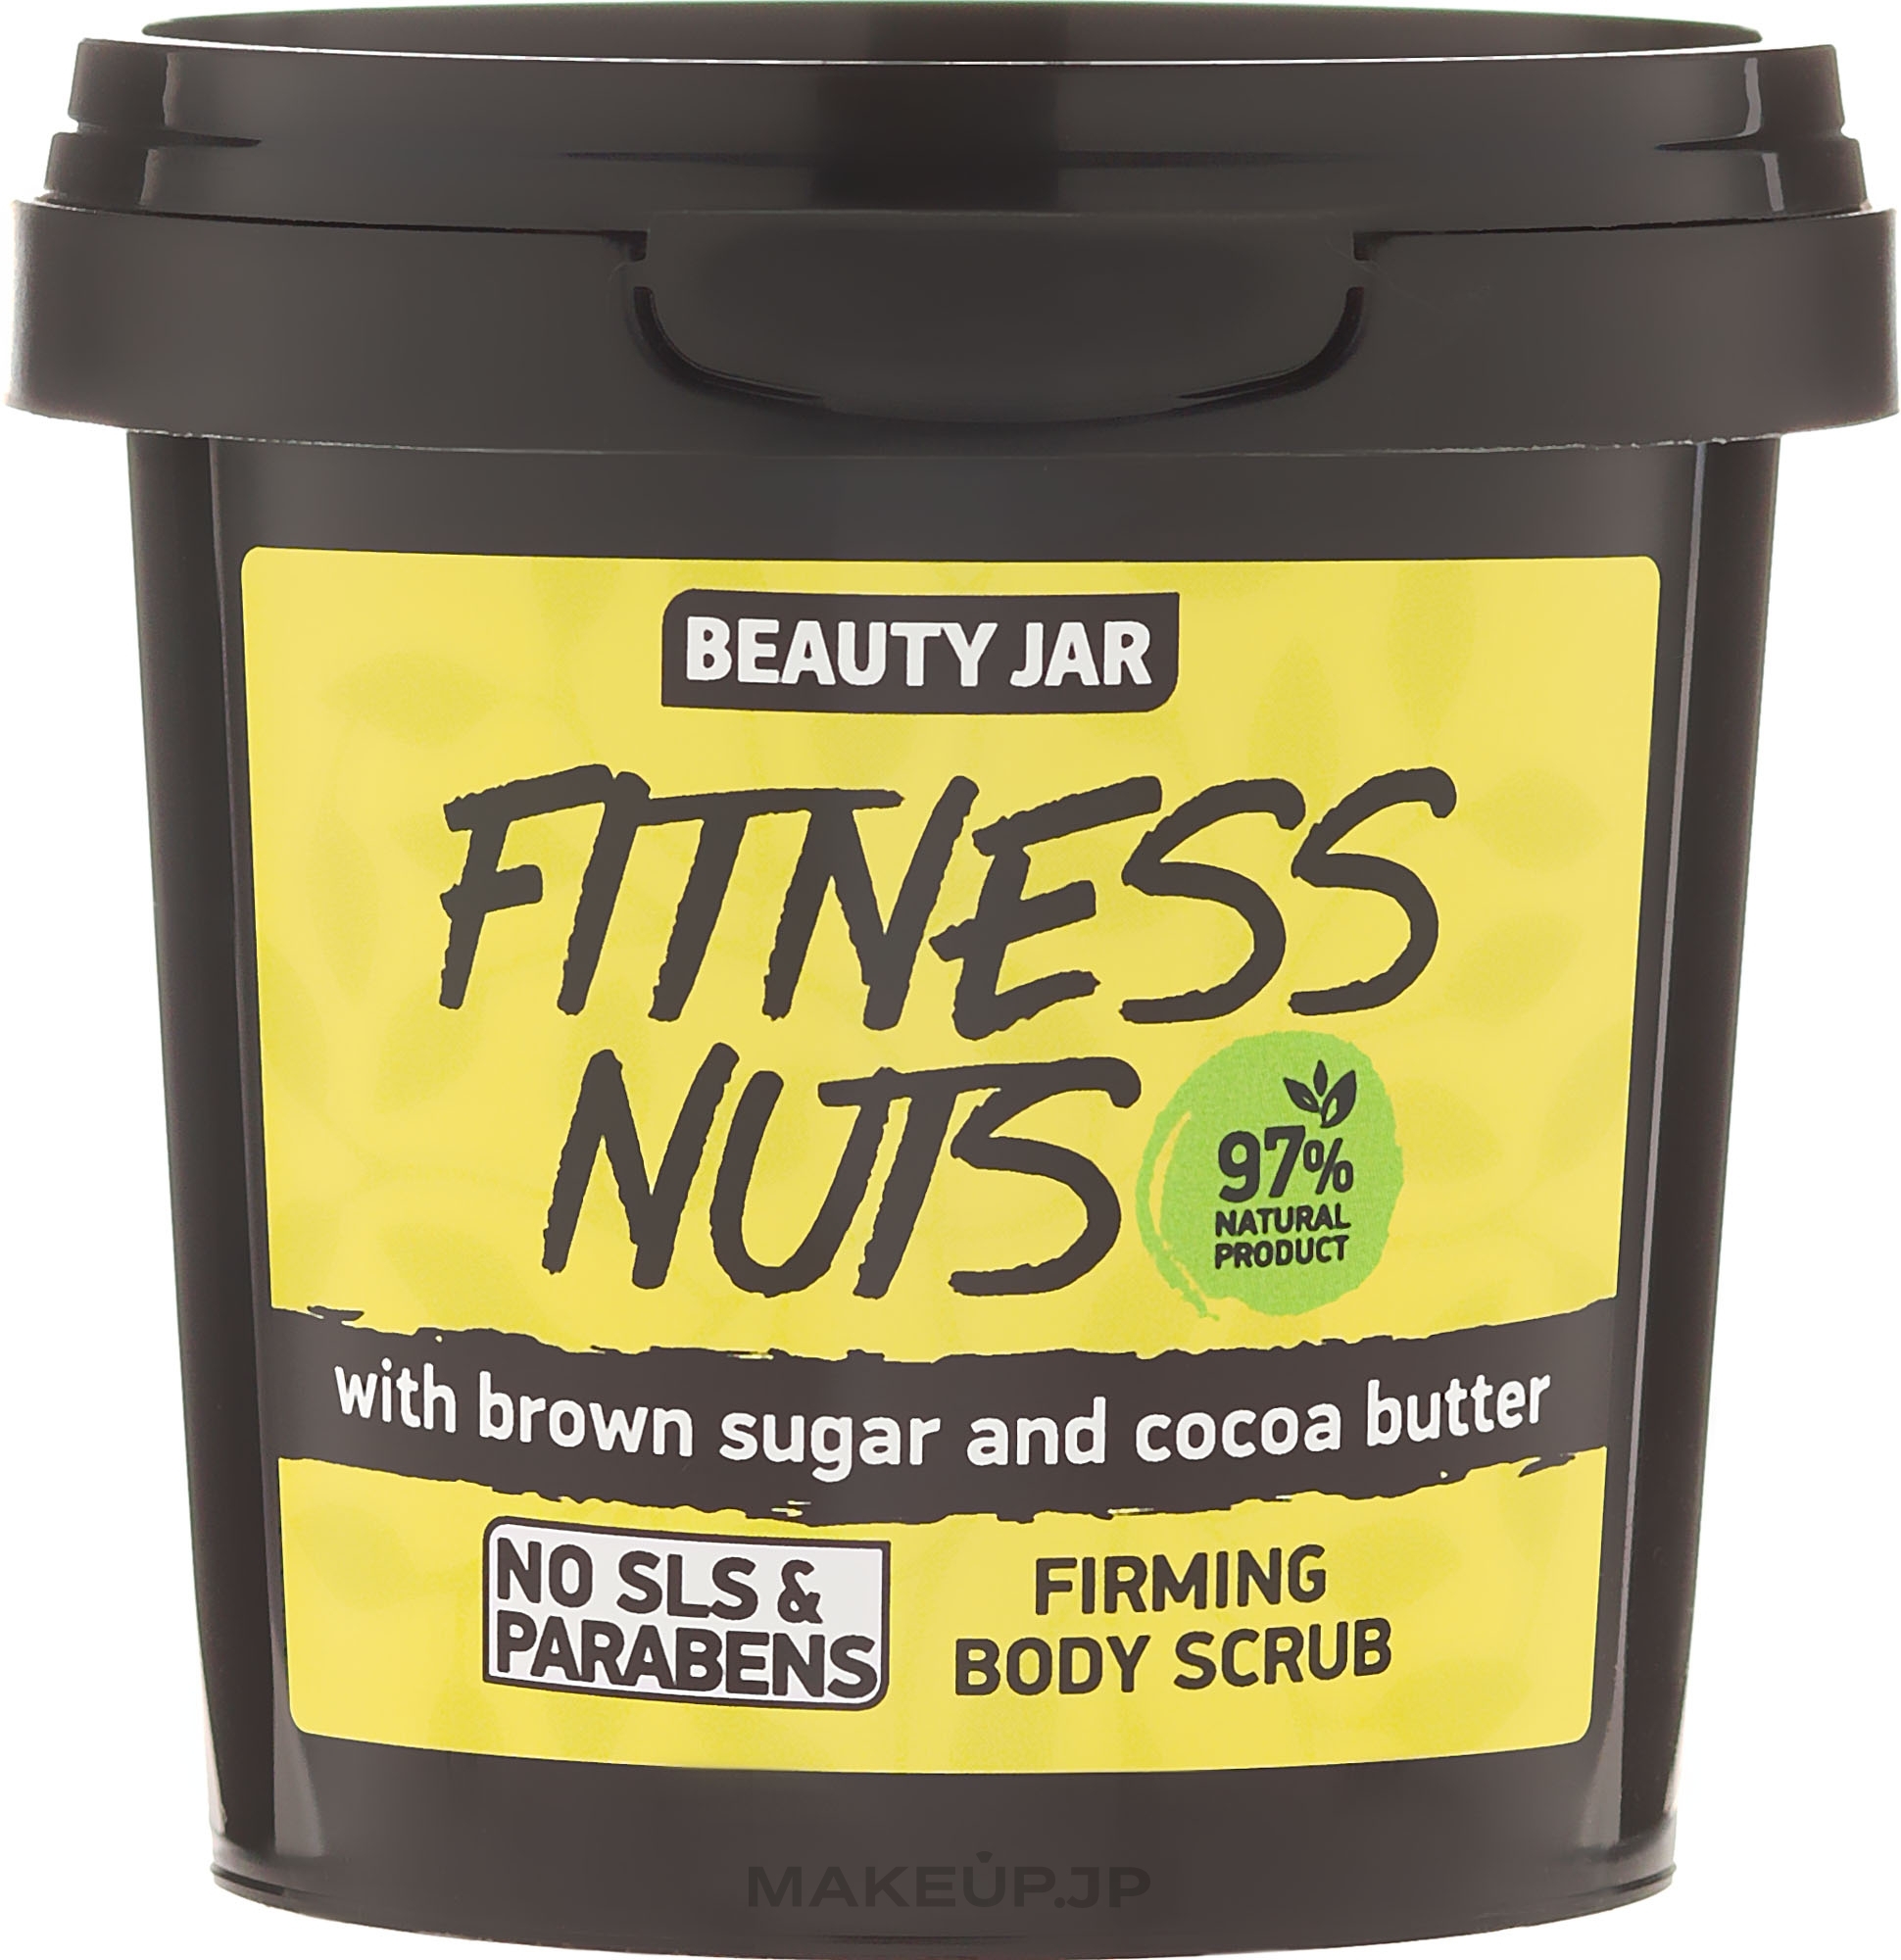 Firming Body Scrub "Fitness Nuts" - Beauty Jar Firming Body Scrub — photo 200 g